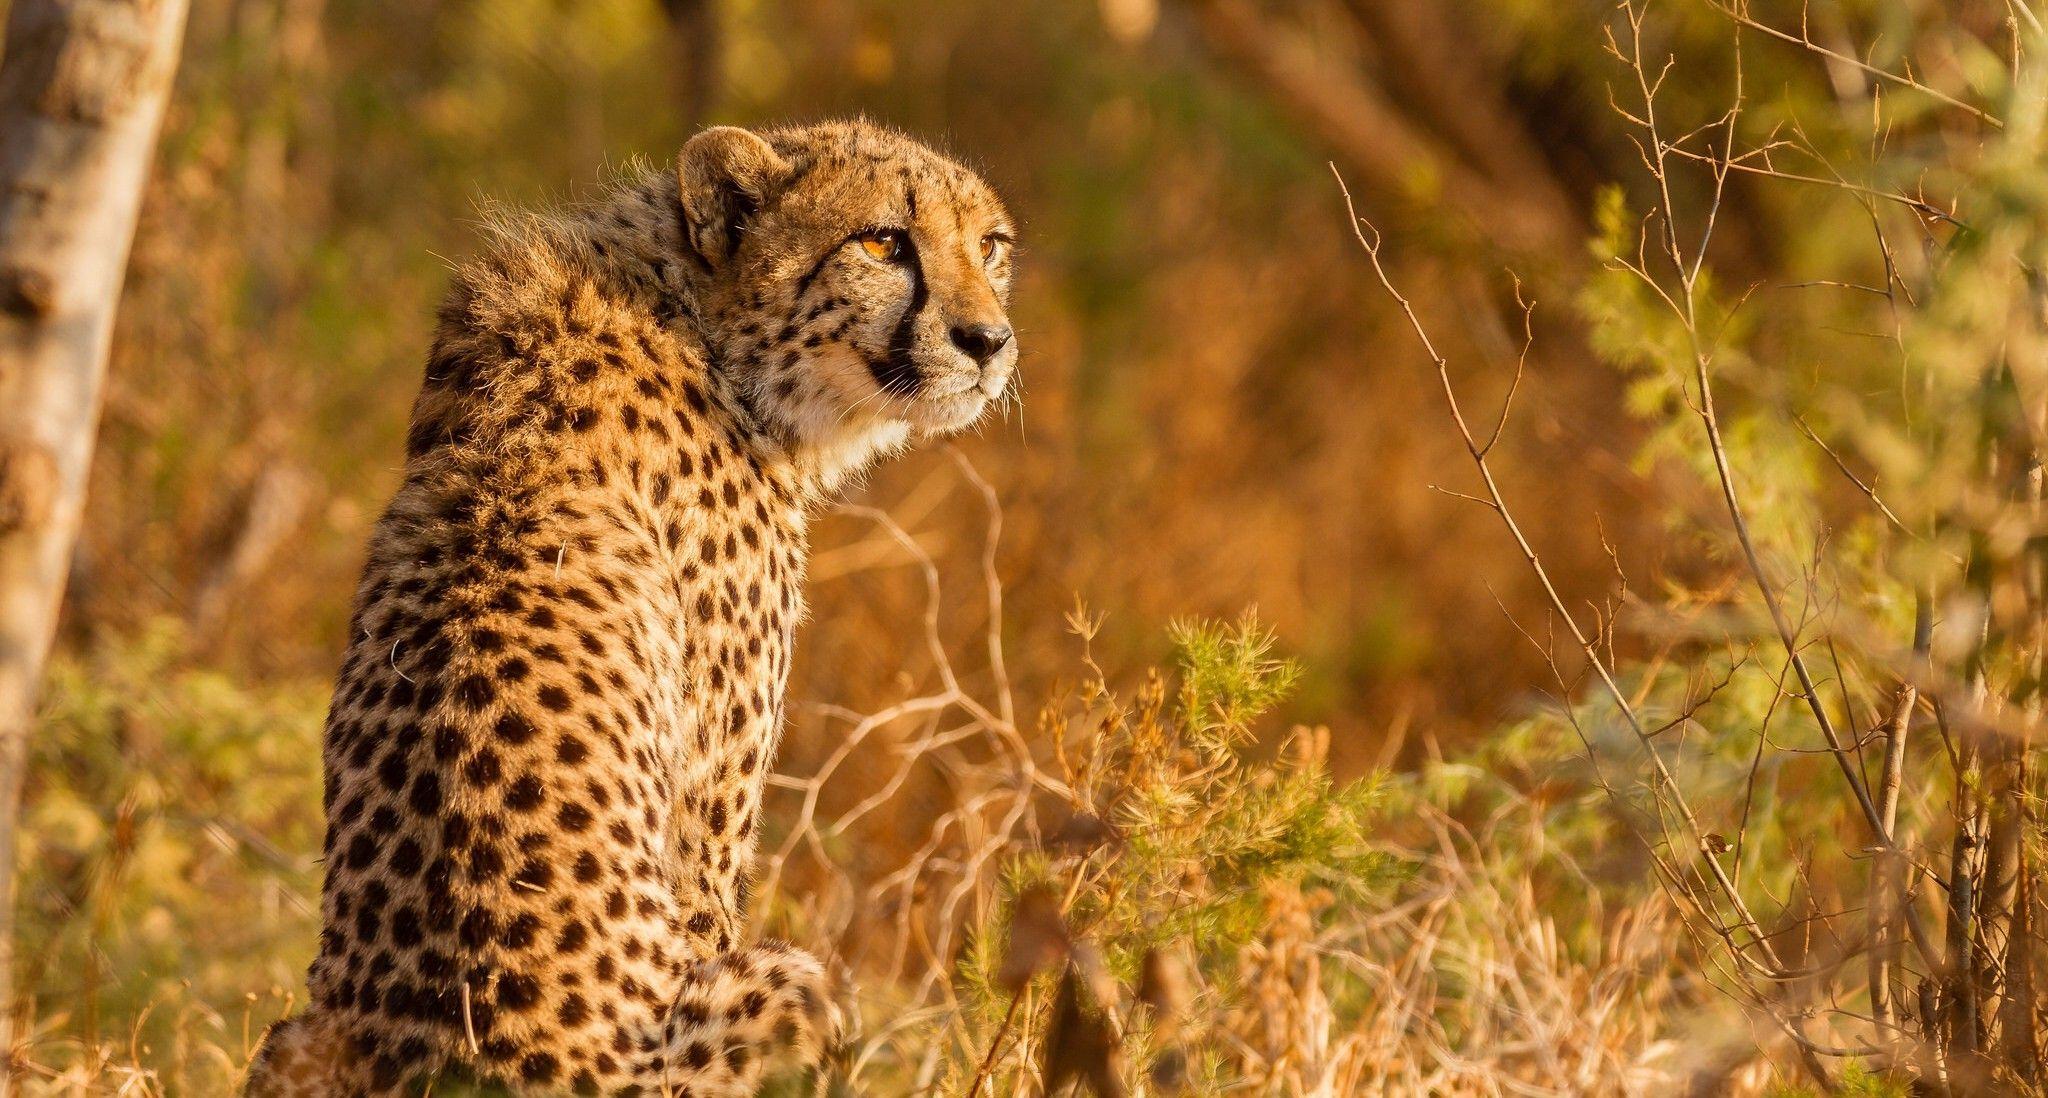 animals feline mammals cheetah wallpaper and background